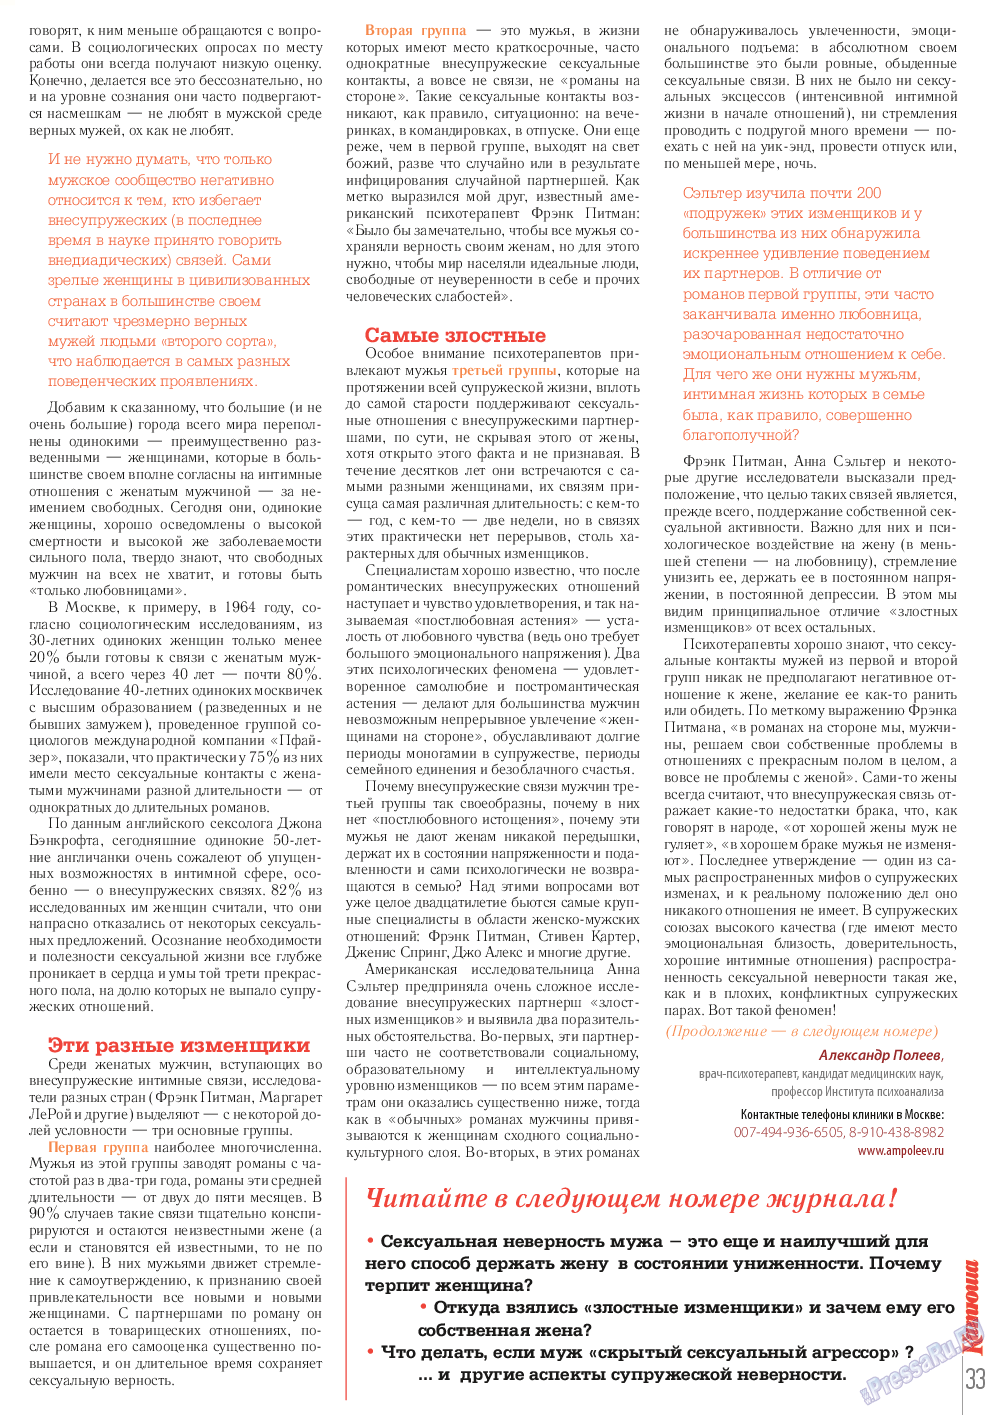 Катюша, журнал. 2013 №35 стр.33